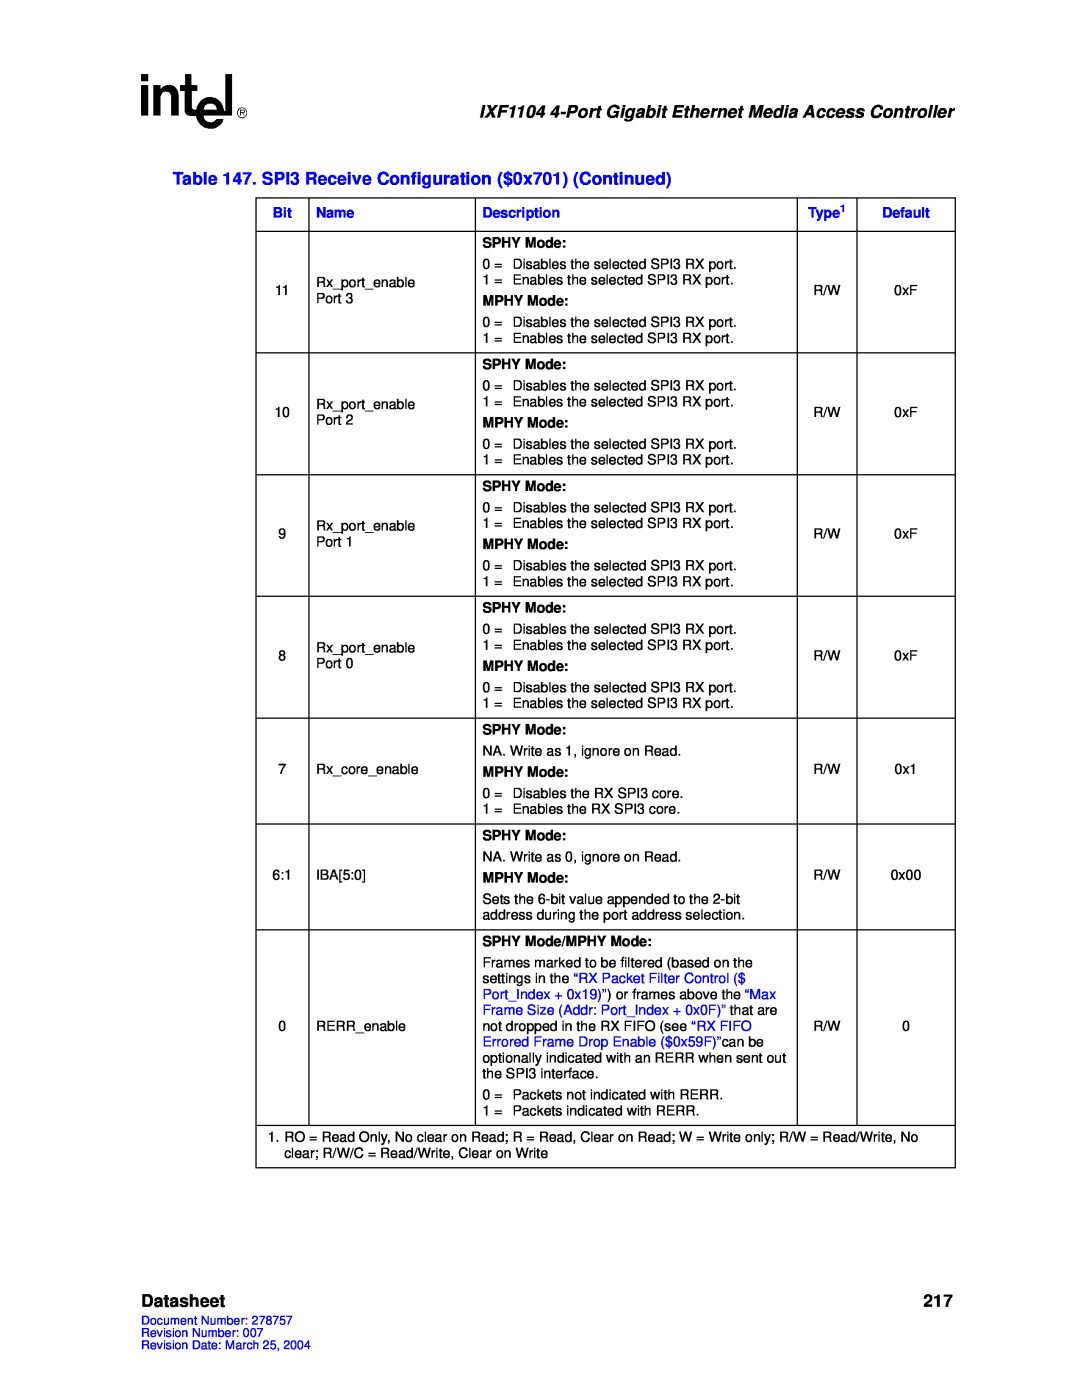 Intel IXF1104 manual Datasheet, SPHY Mode/MPHY Mode 